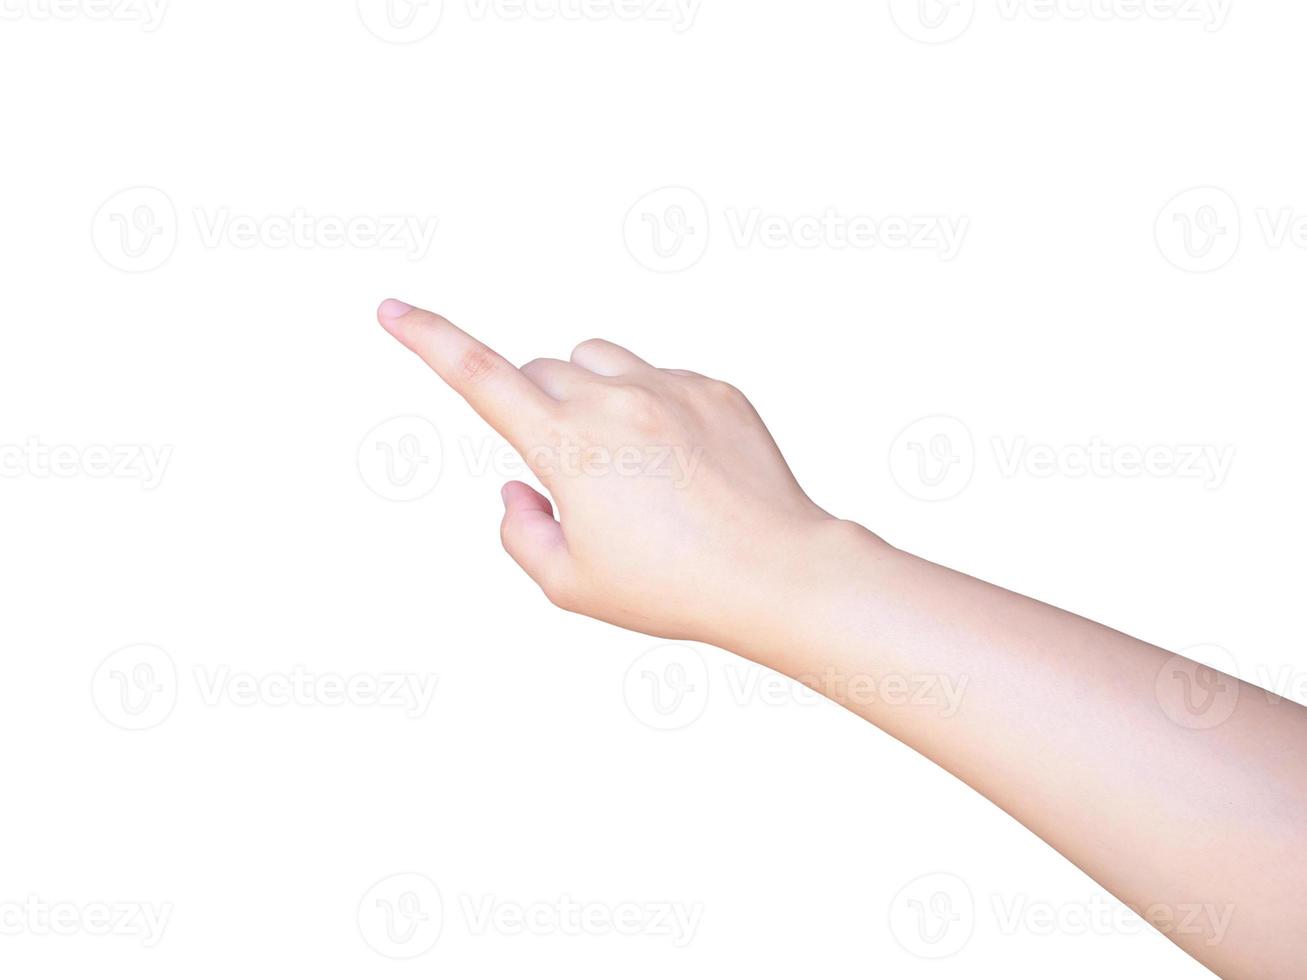 mano femenina tocando o señalando algo aislado en blanco foto